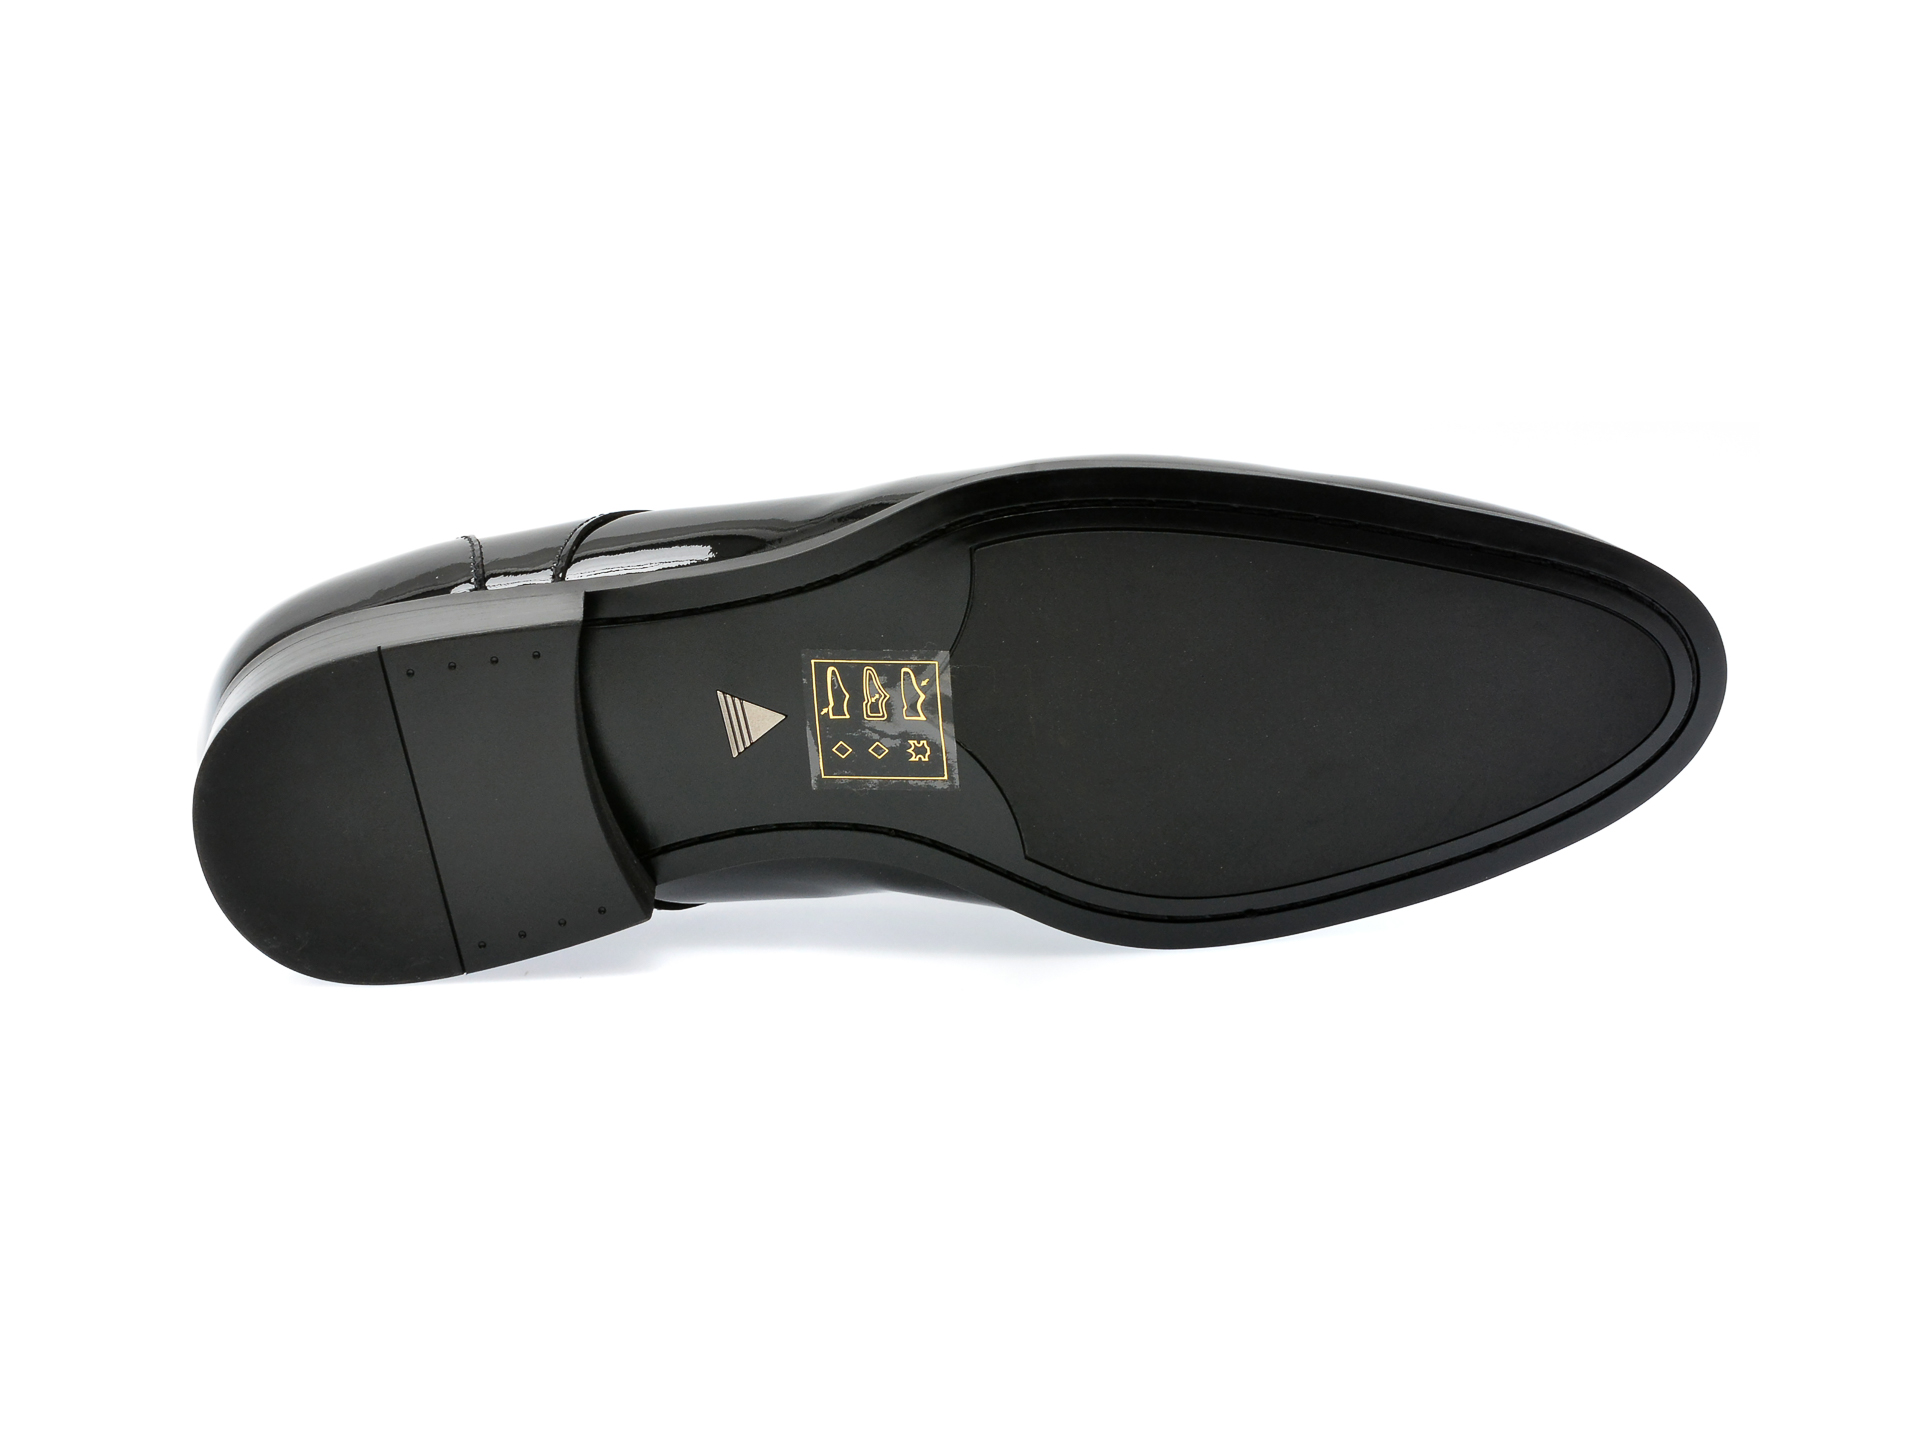 Pantofi ALDO negri, KINGSLEY004, din piele naturala lacuita